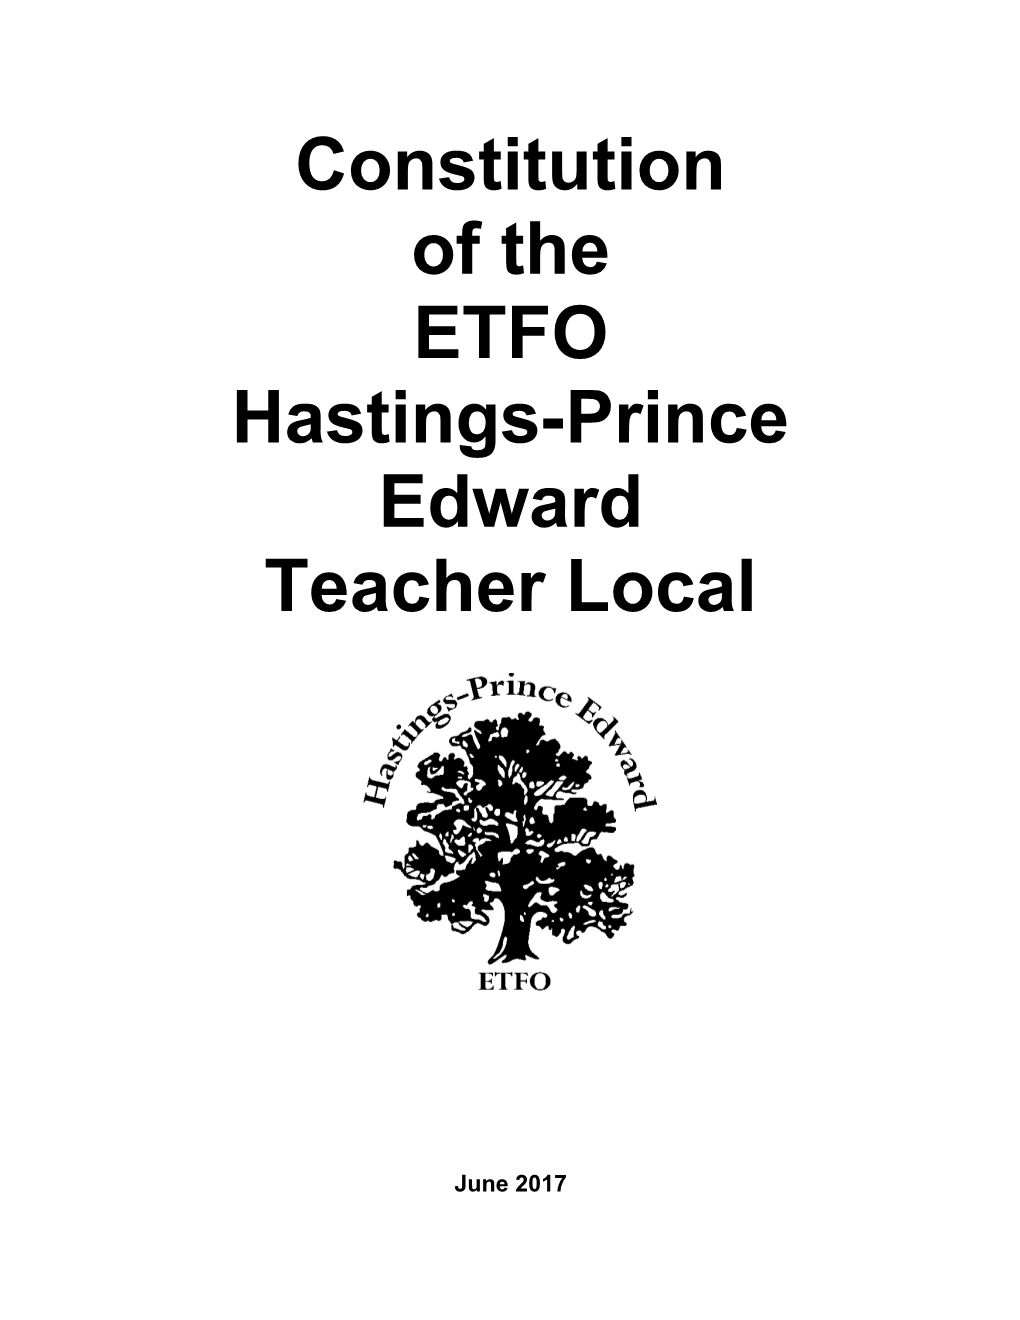 Hastings-Prince Edward